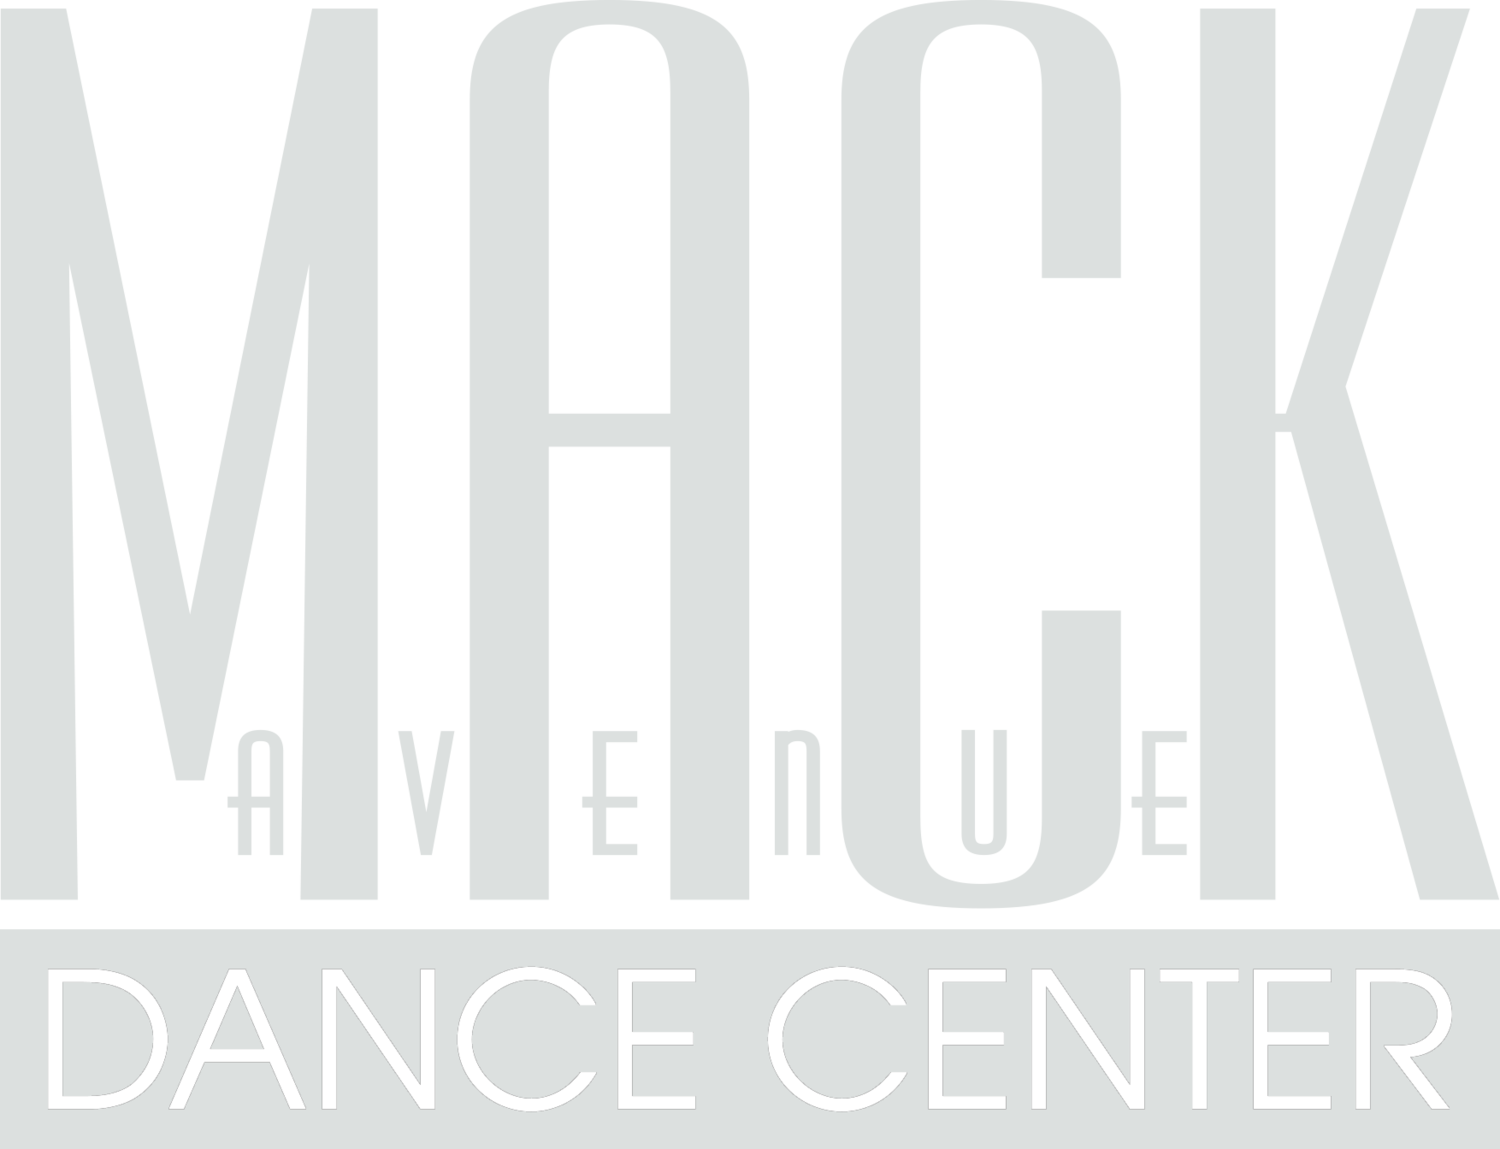 Mack Avenue Dance Center